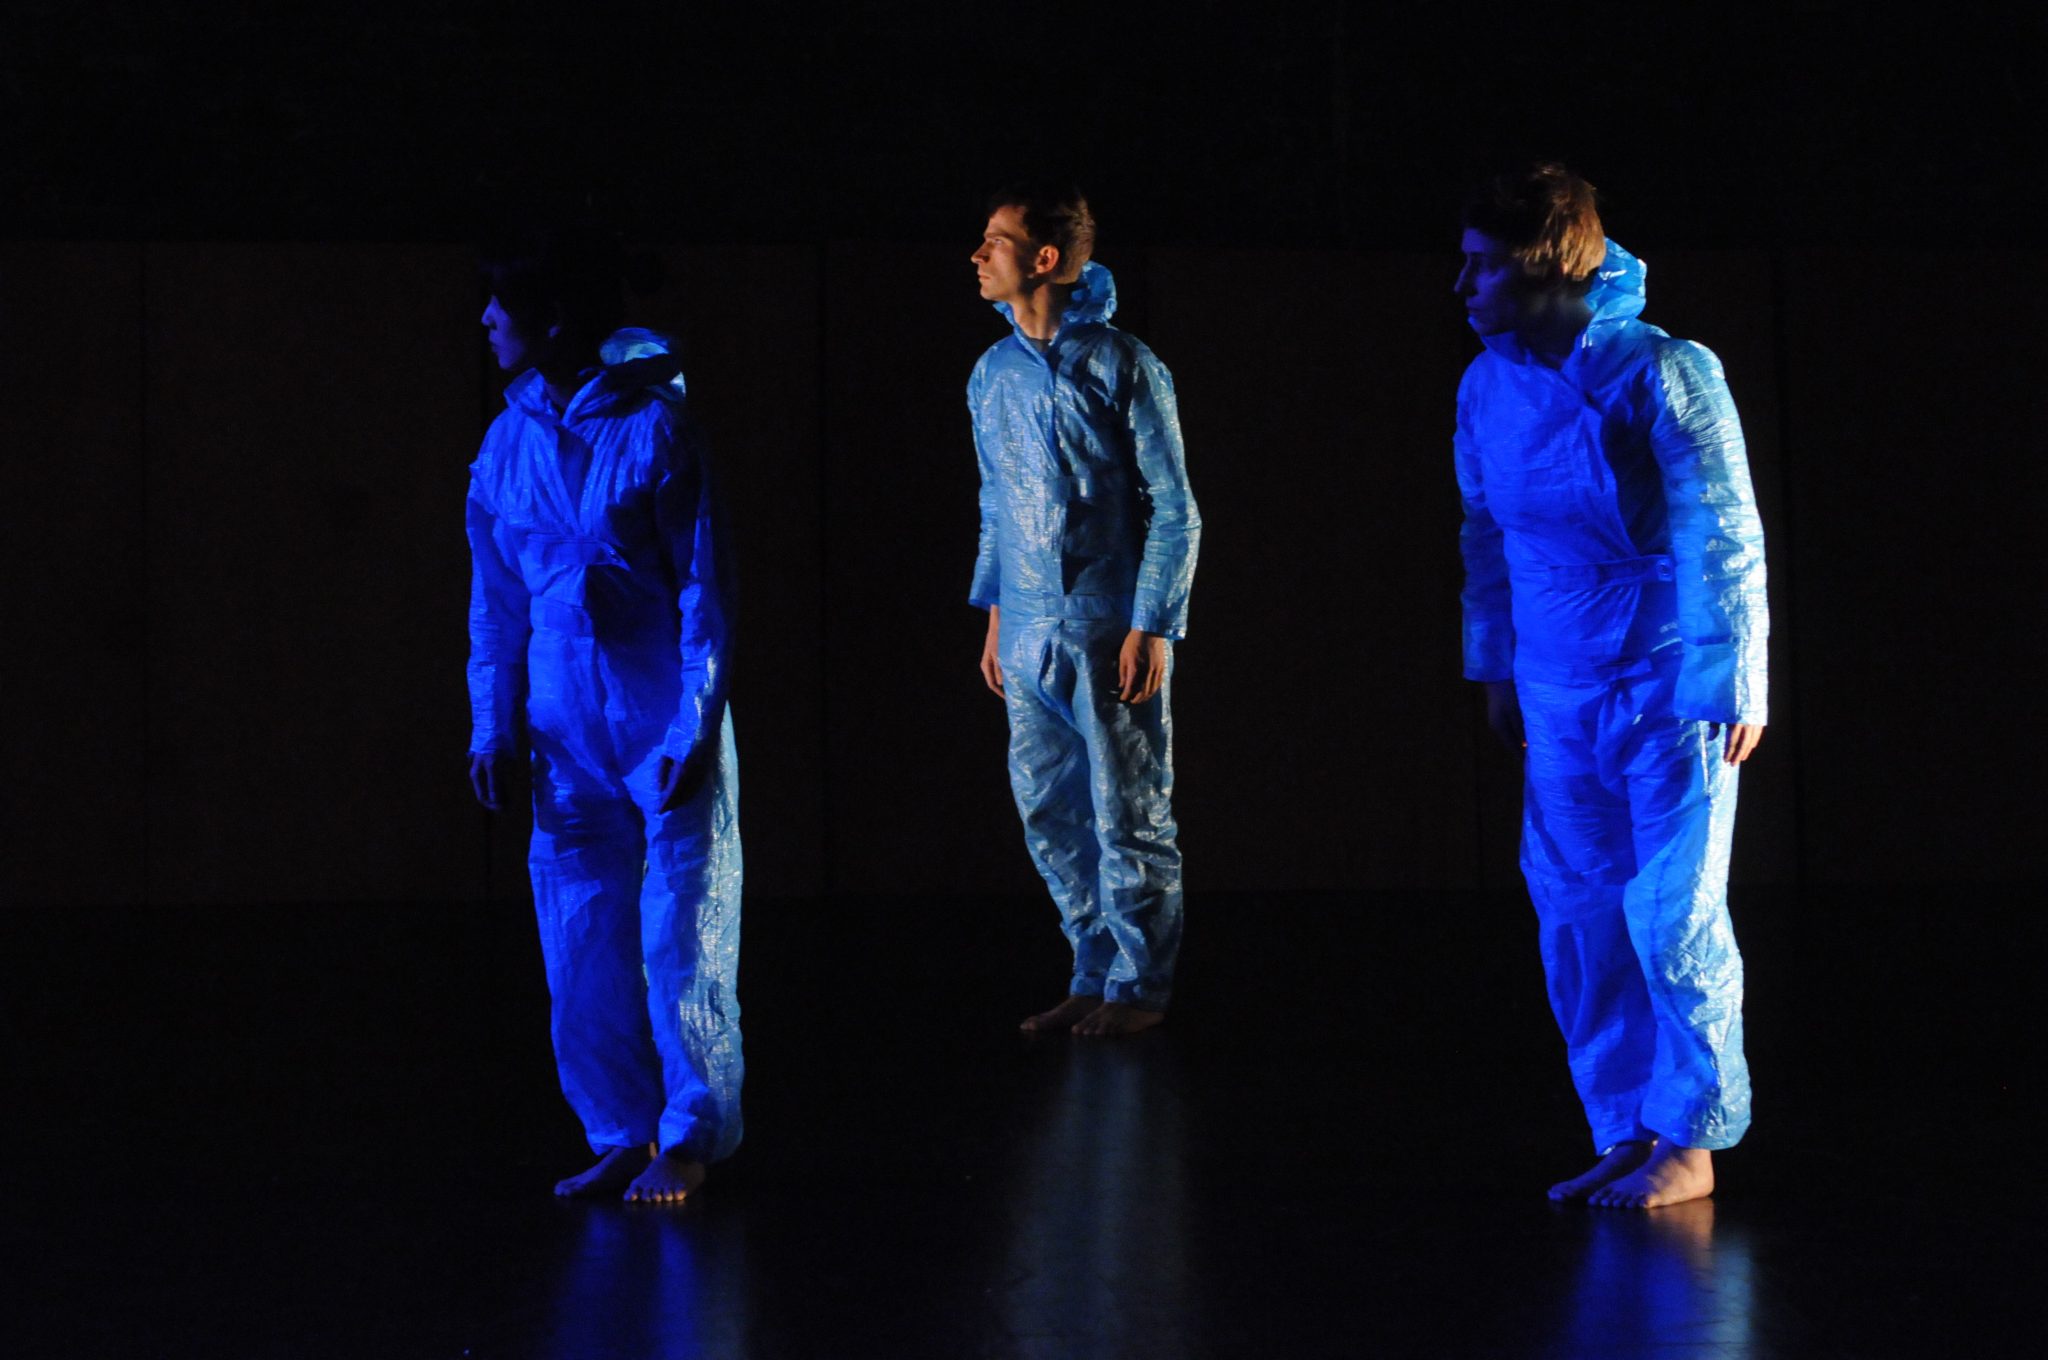 Performance imagines a nuclear apocalypse